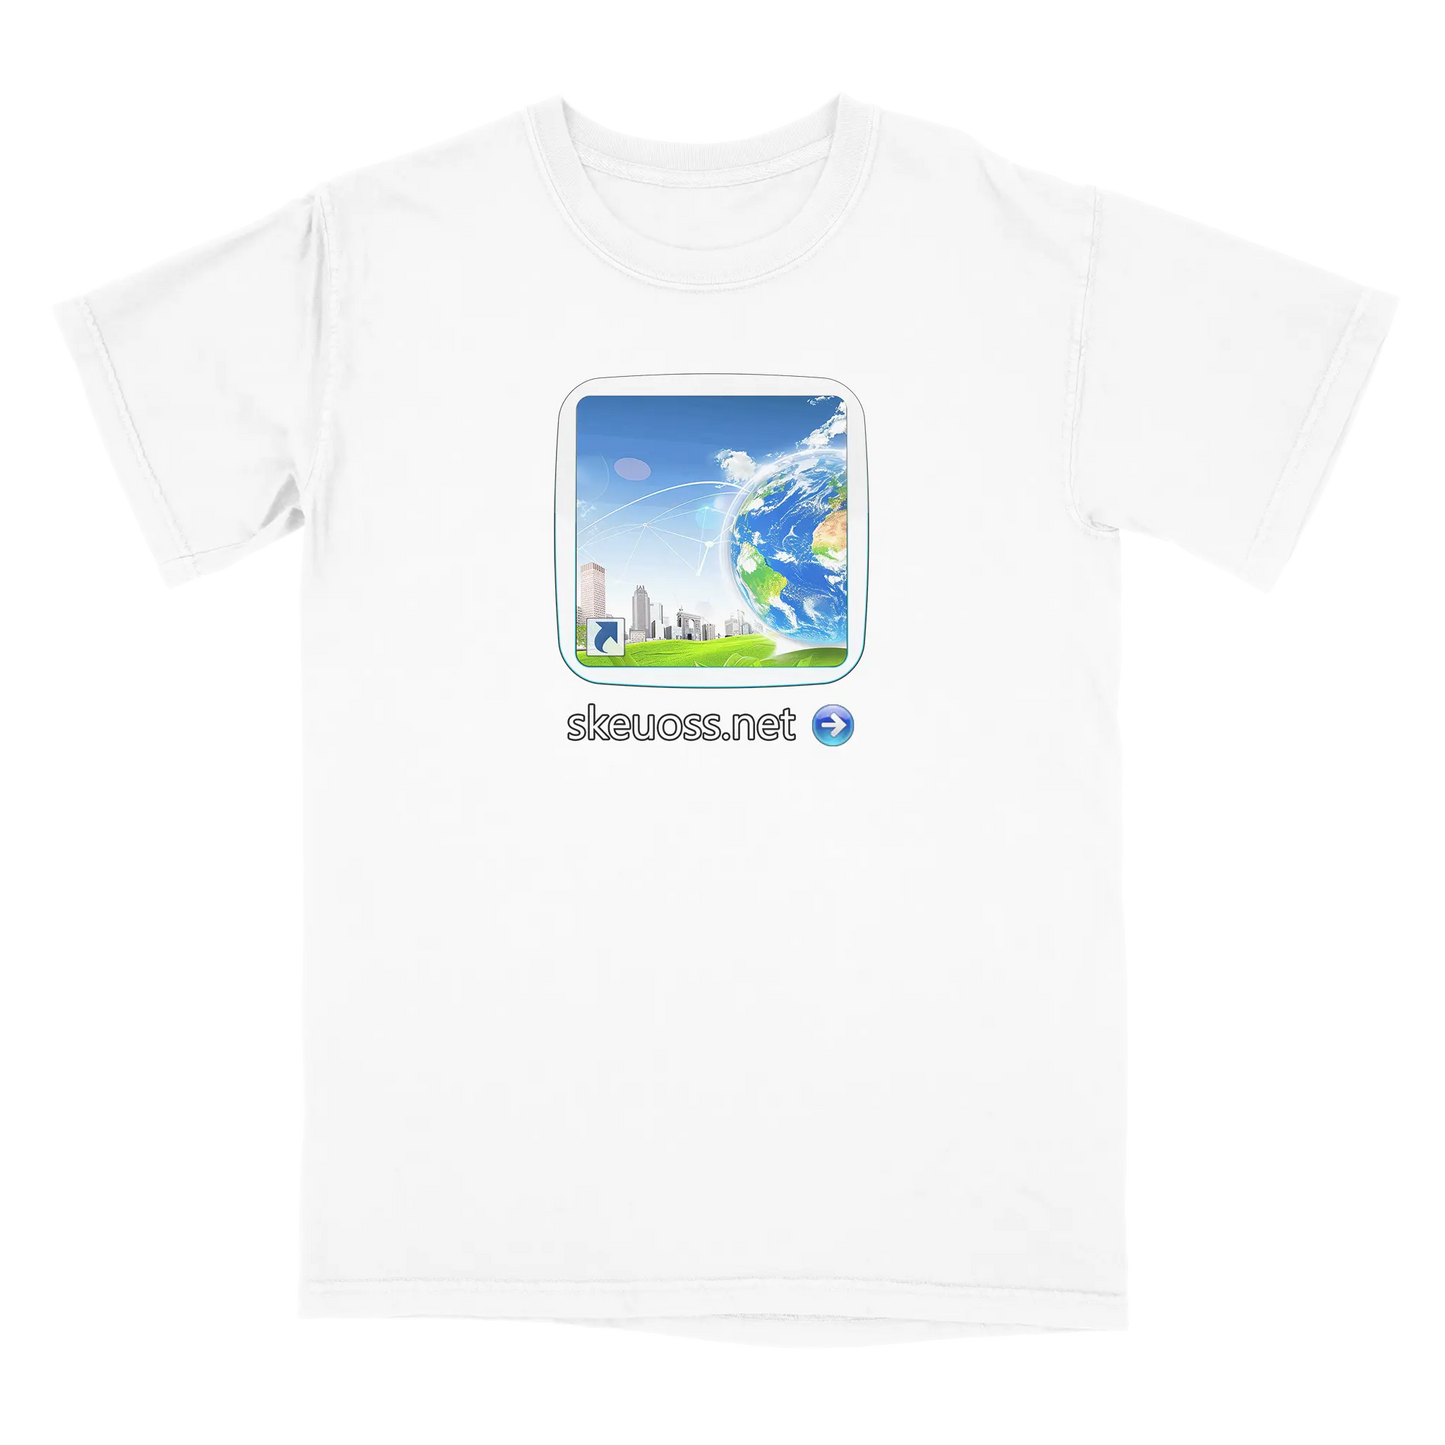 Frutiger Aero T-shirt - User Login Collection - User 371